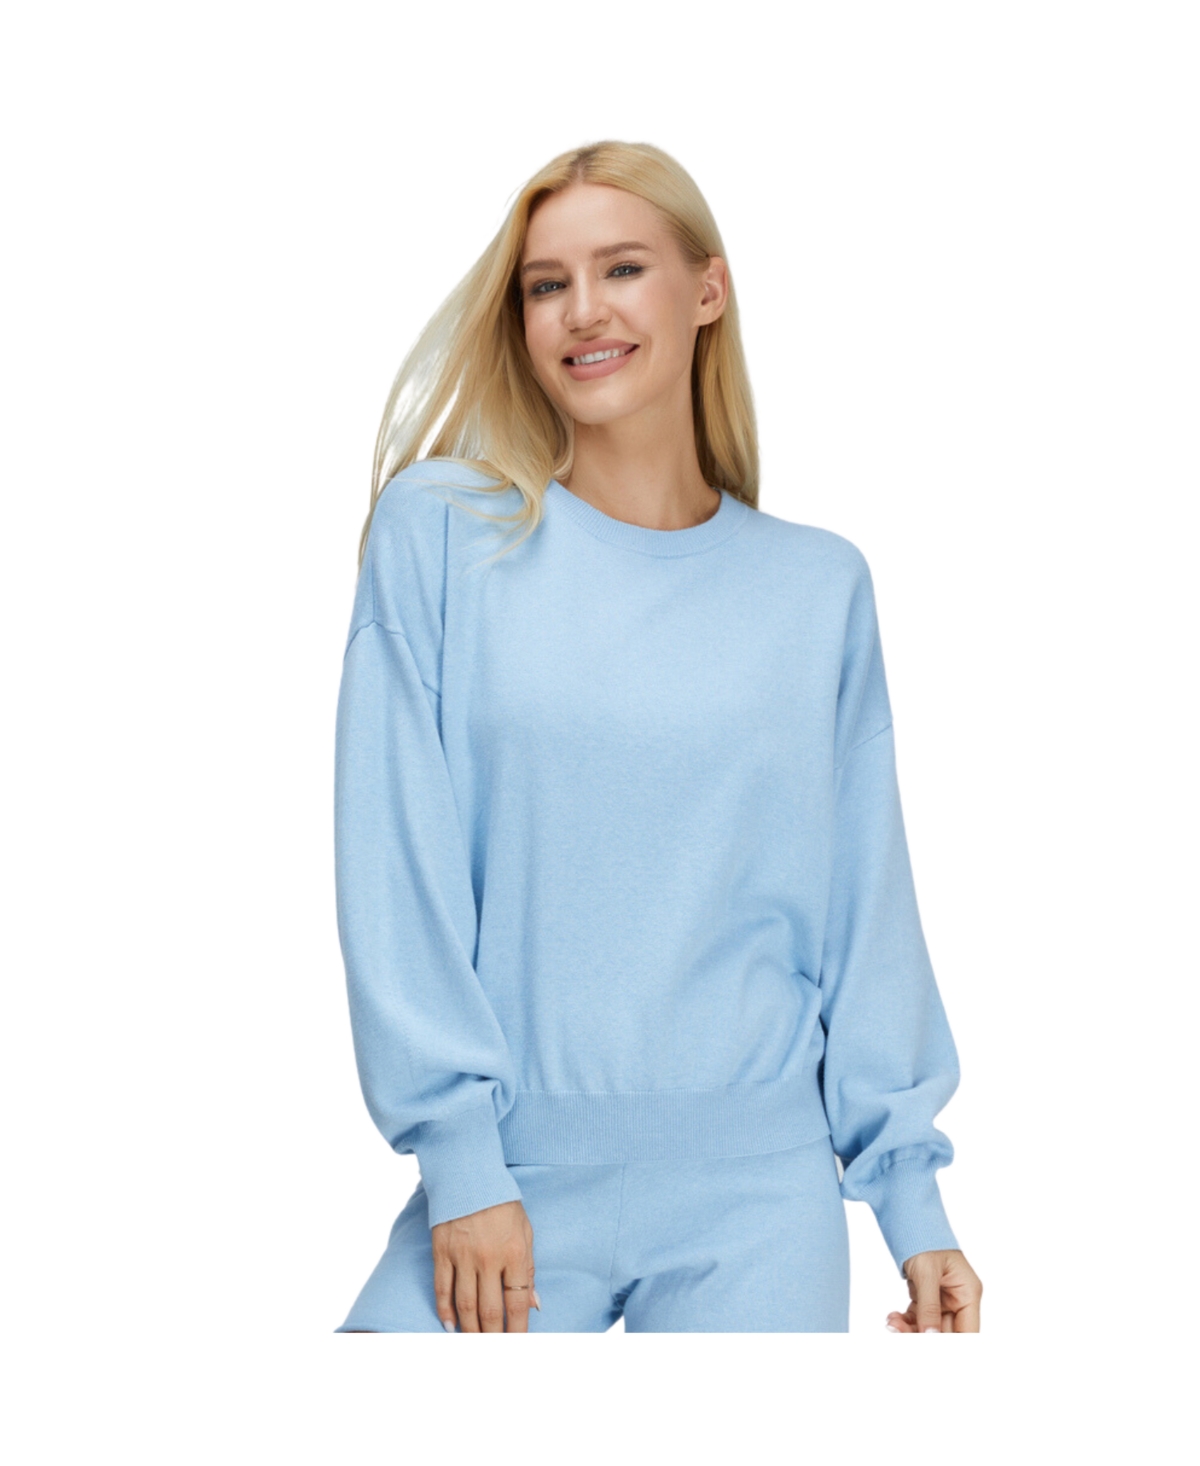 Bellemere Women's Chic Sport Cotton Cashmere Sweater - Light blue